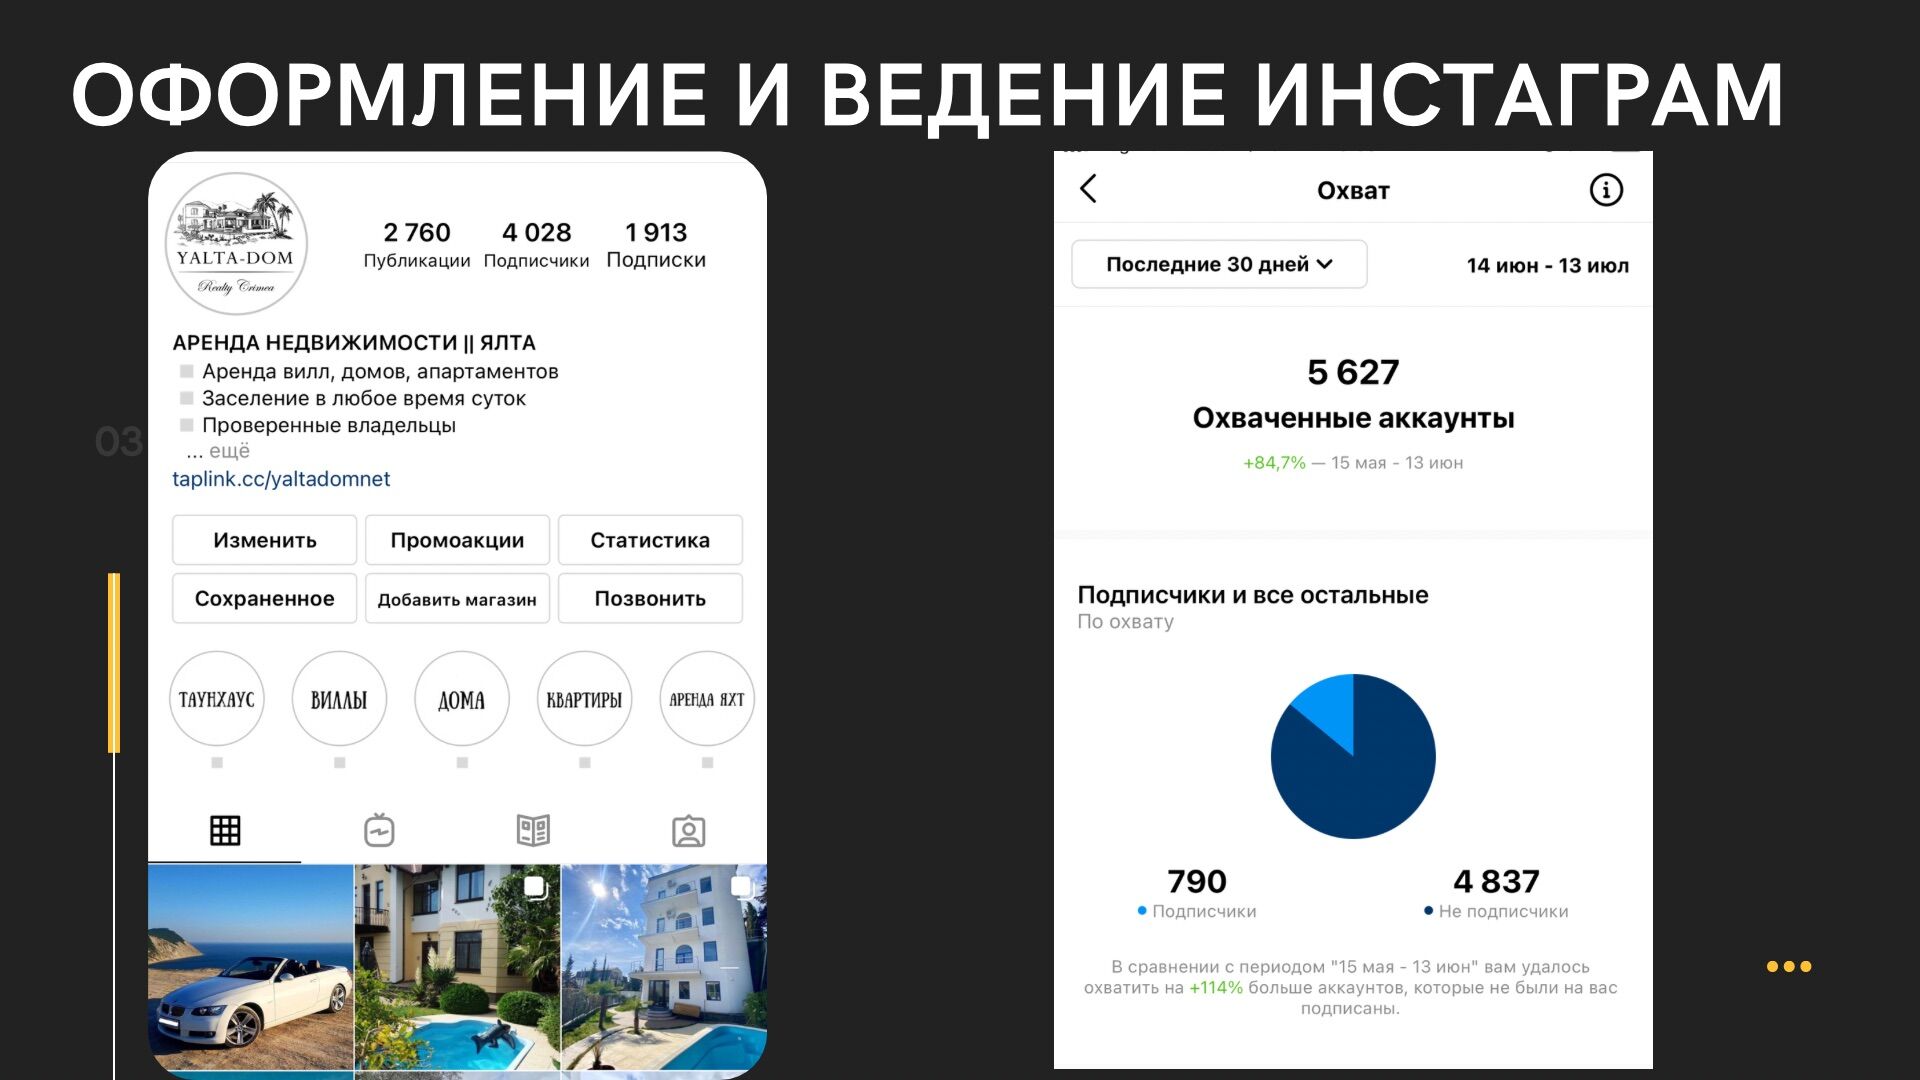 SMM instagram - базовый тариф за 22 000 руб.